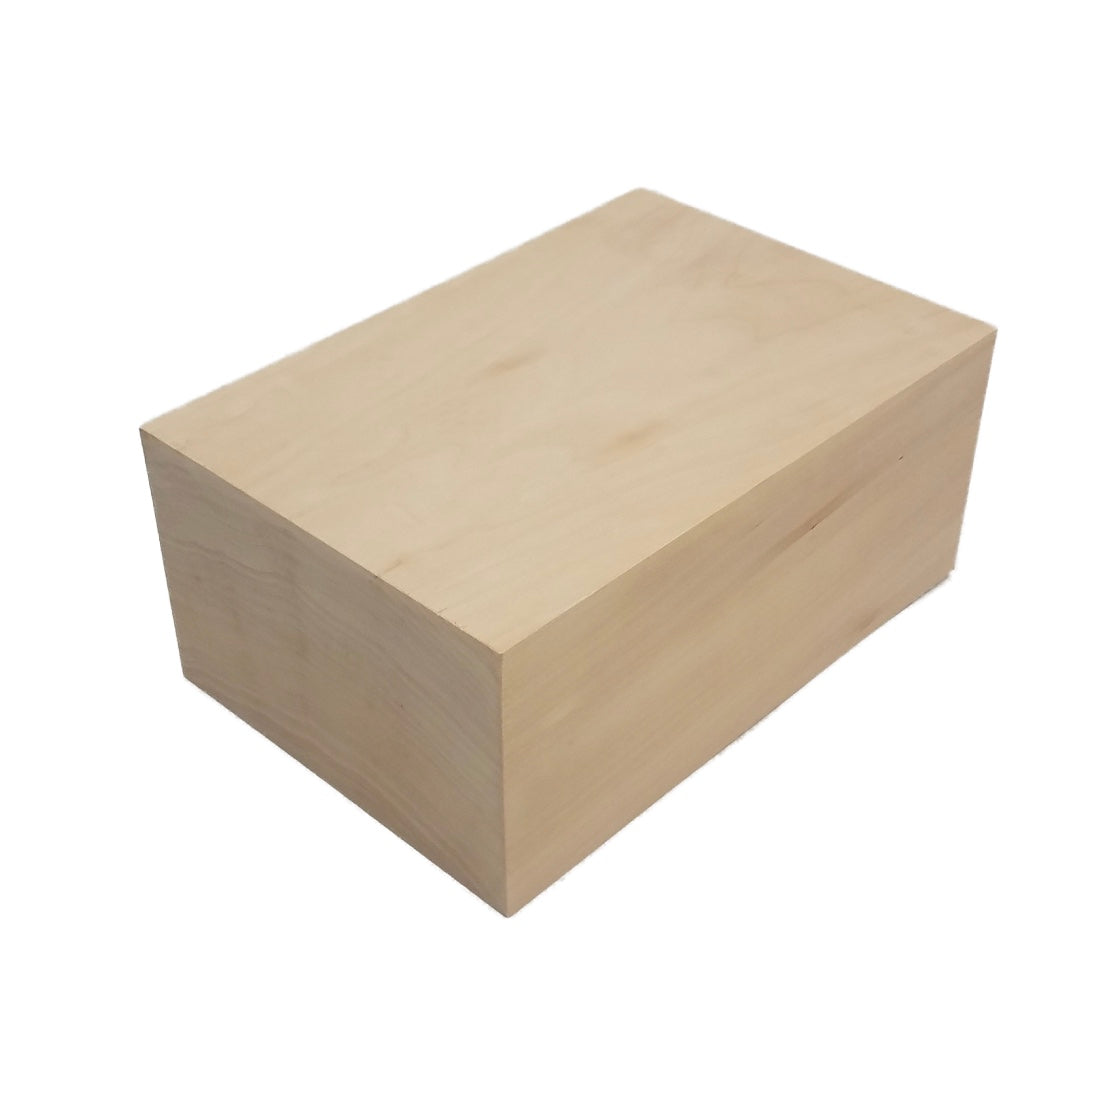 Basswood Lumber Carving Blocks - 4" x 6" (1Pc)